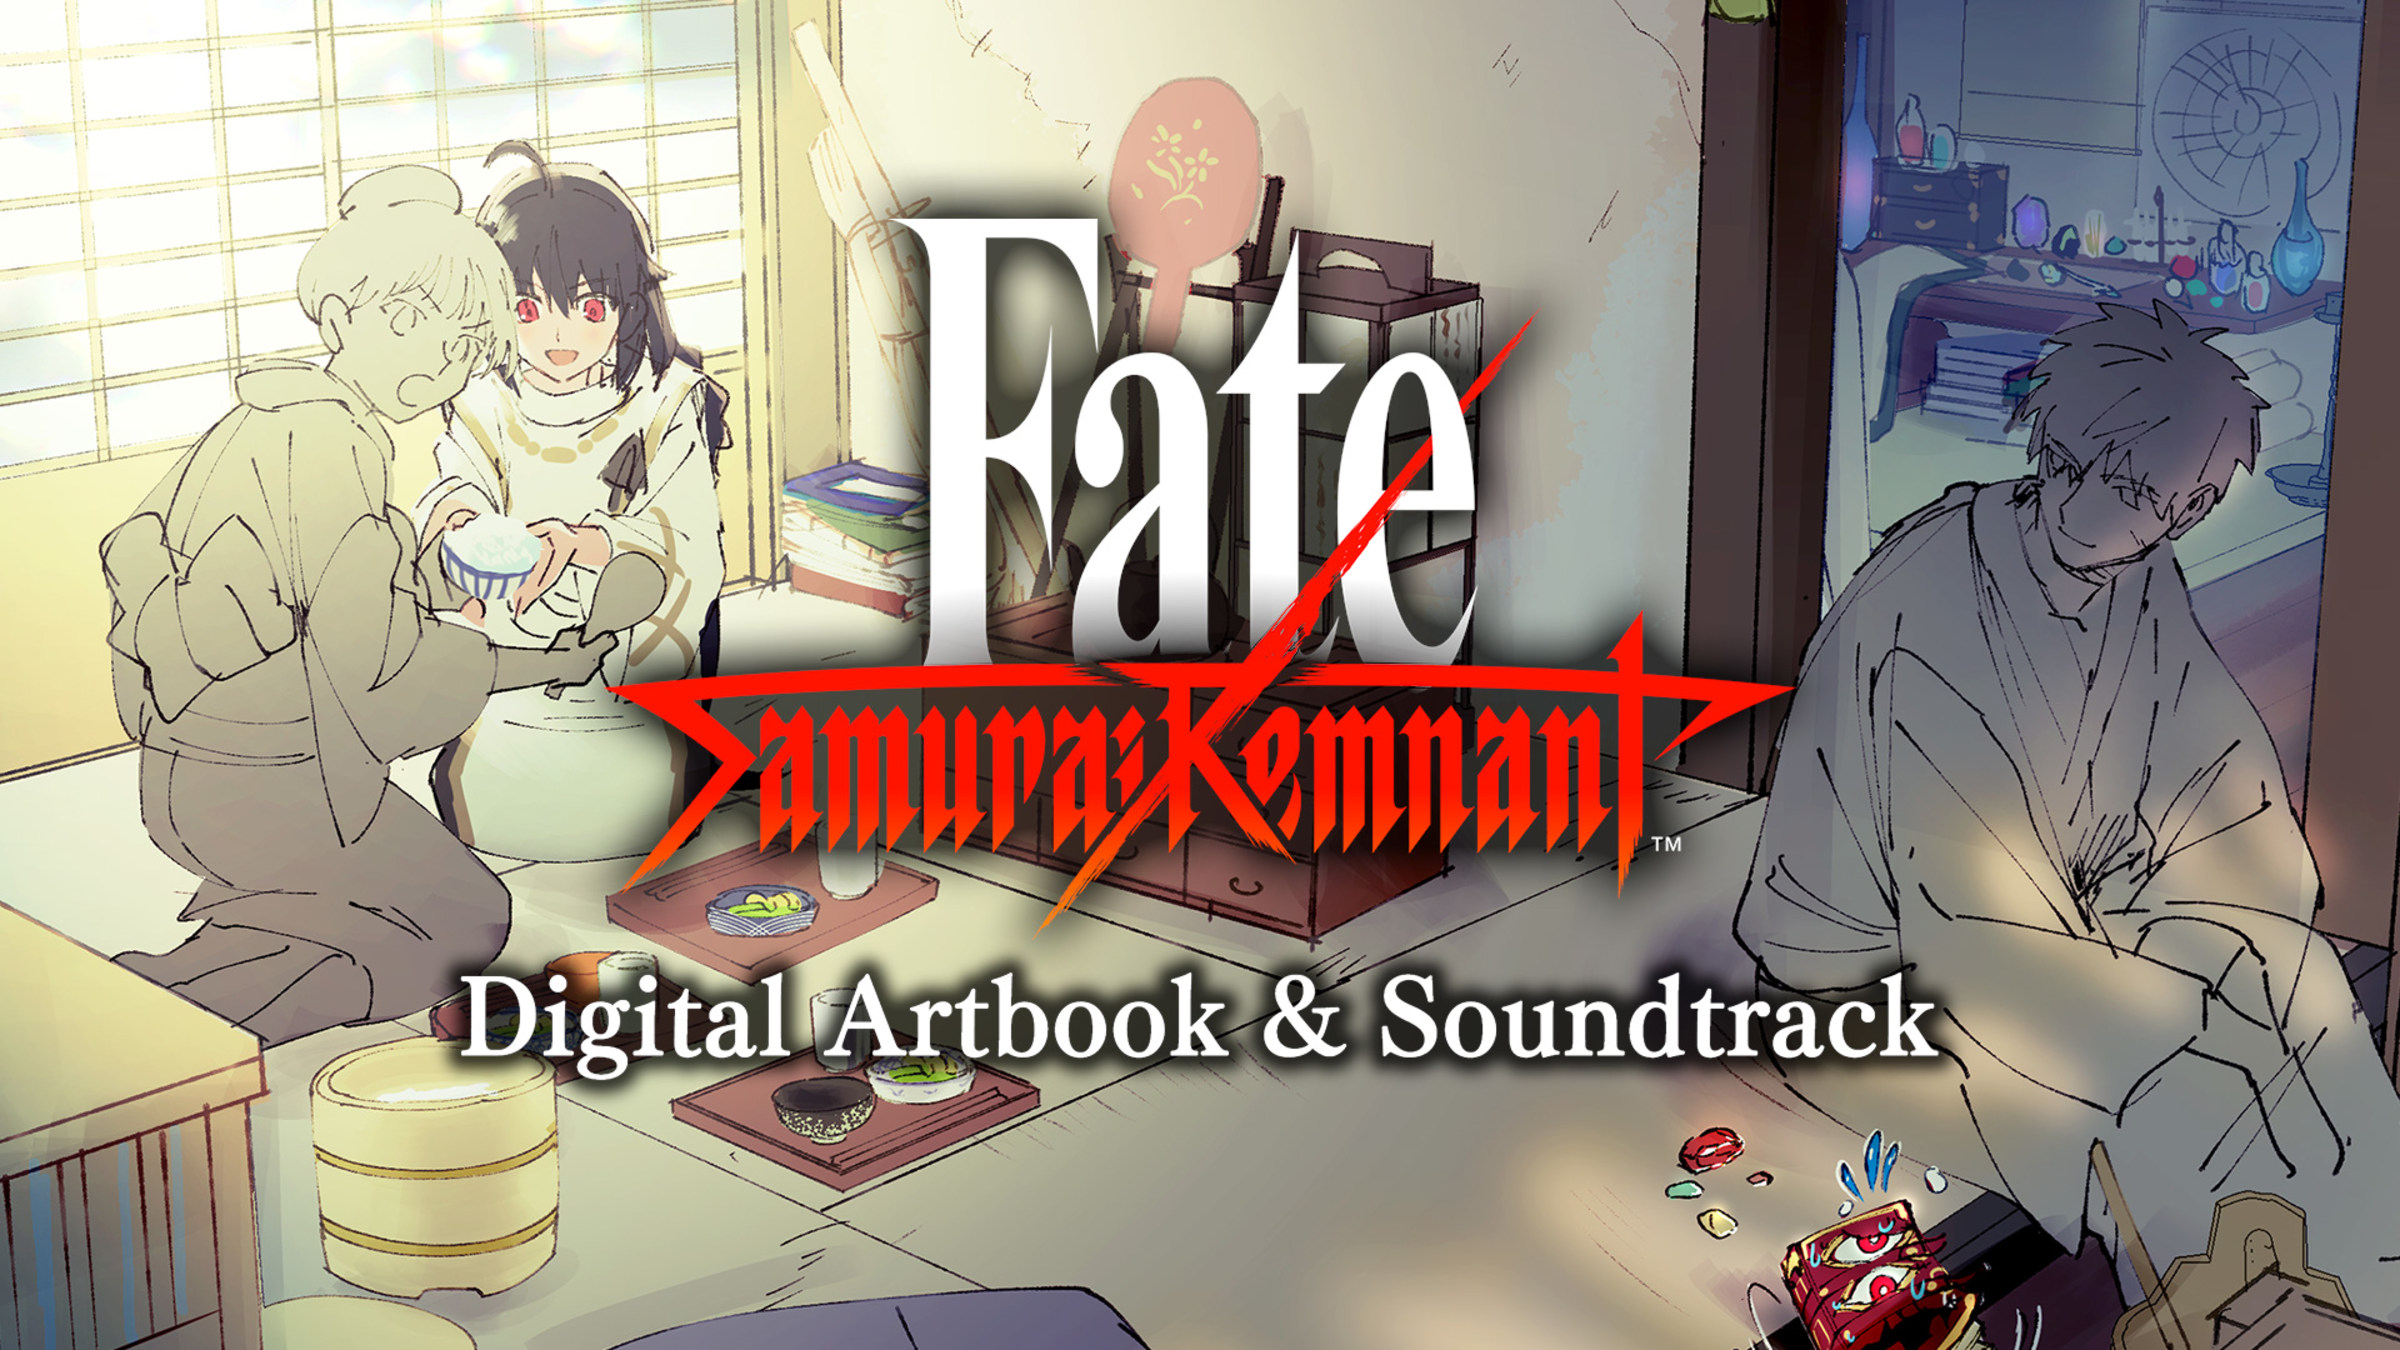 Fate/Samurai Remnant Digital Artbook & Soundtrack for Nintendo